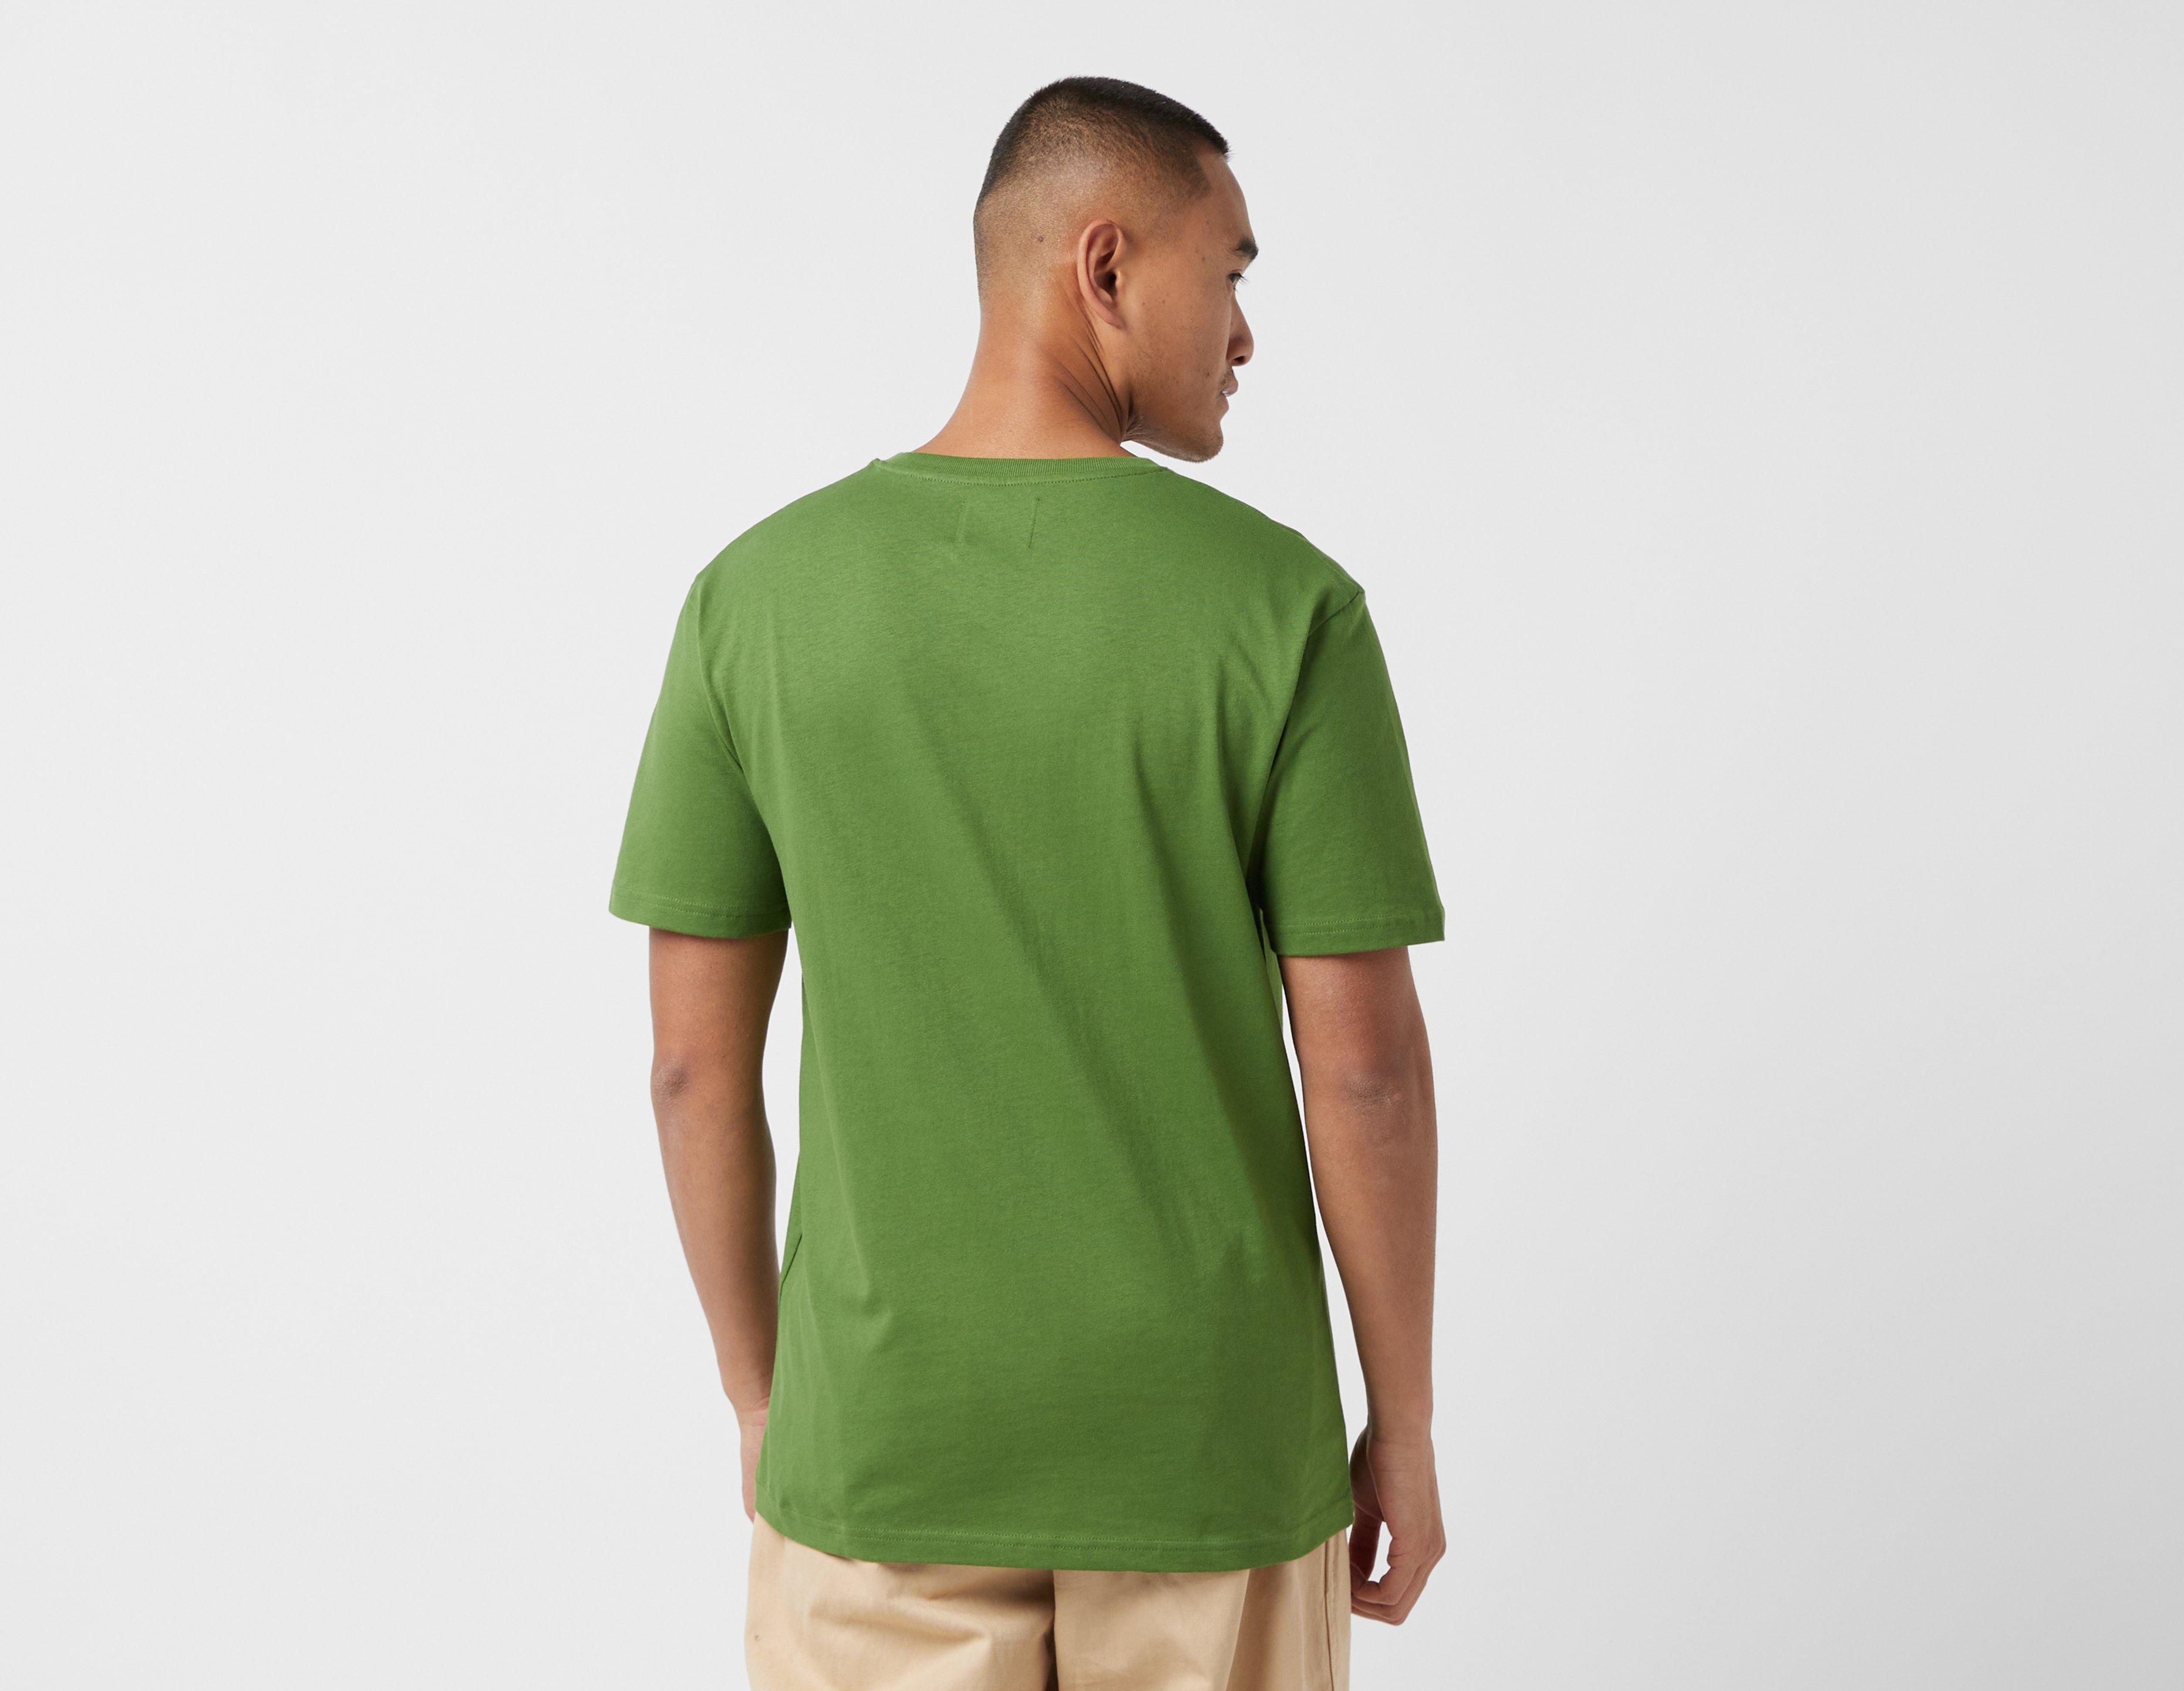 Klassic cotton sweatshirt Shirt Wood Green Healthdesign? Script Toni | Ace A neutri Double - T Wood Trey - by